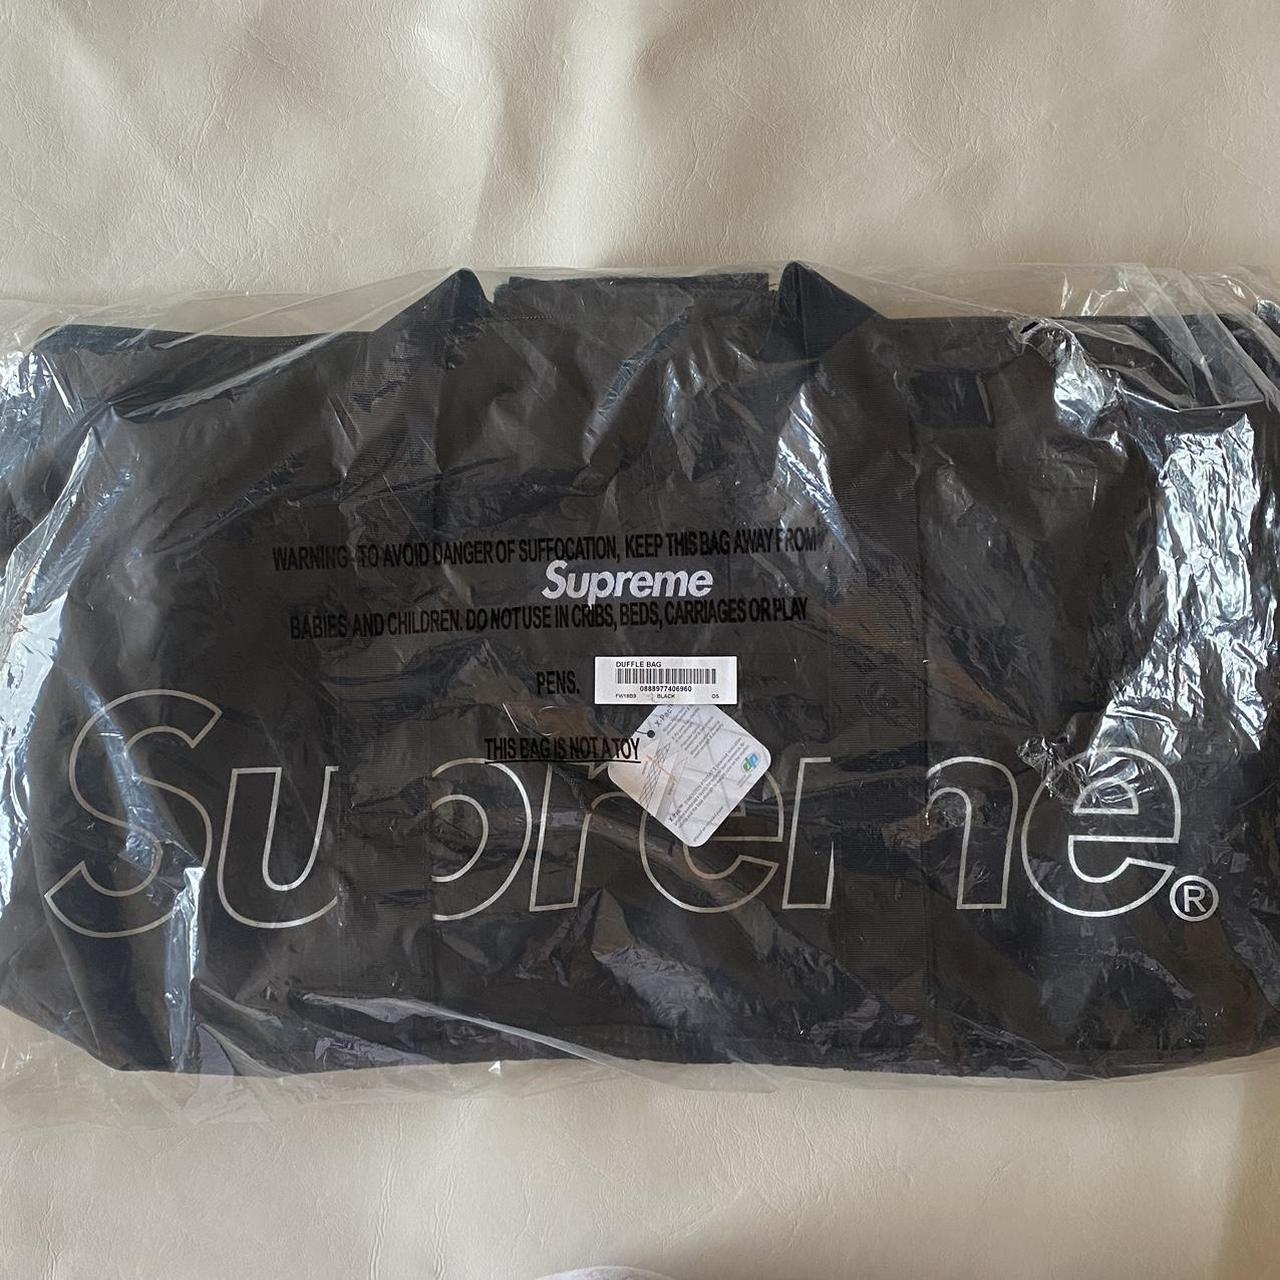 Supreme Duffle Bag Black(FW18)